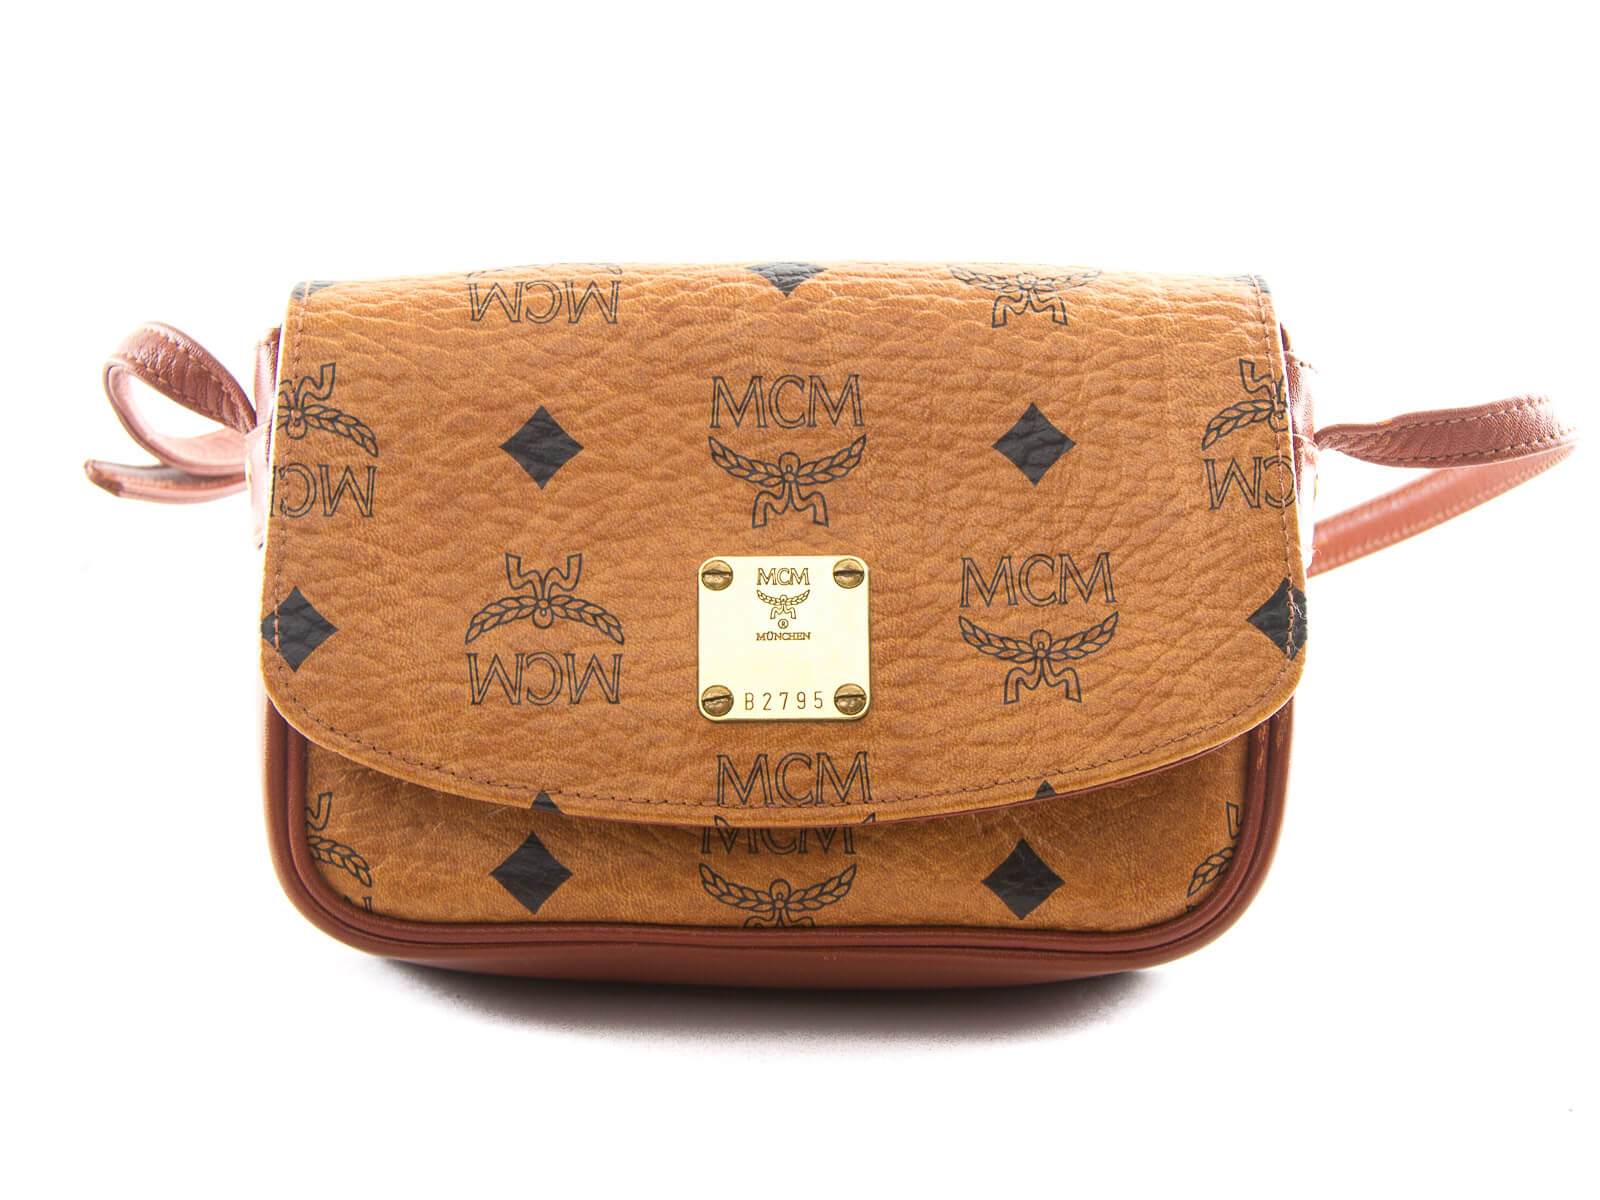 MCM Clothing Logo - Authentic MCM Logos Pattern mini crossbody bag. Connect Japan Luxury